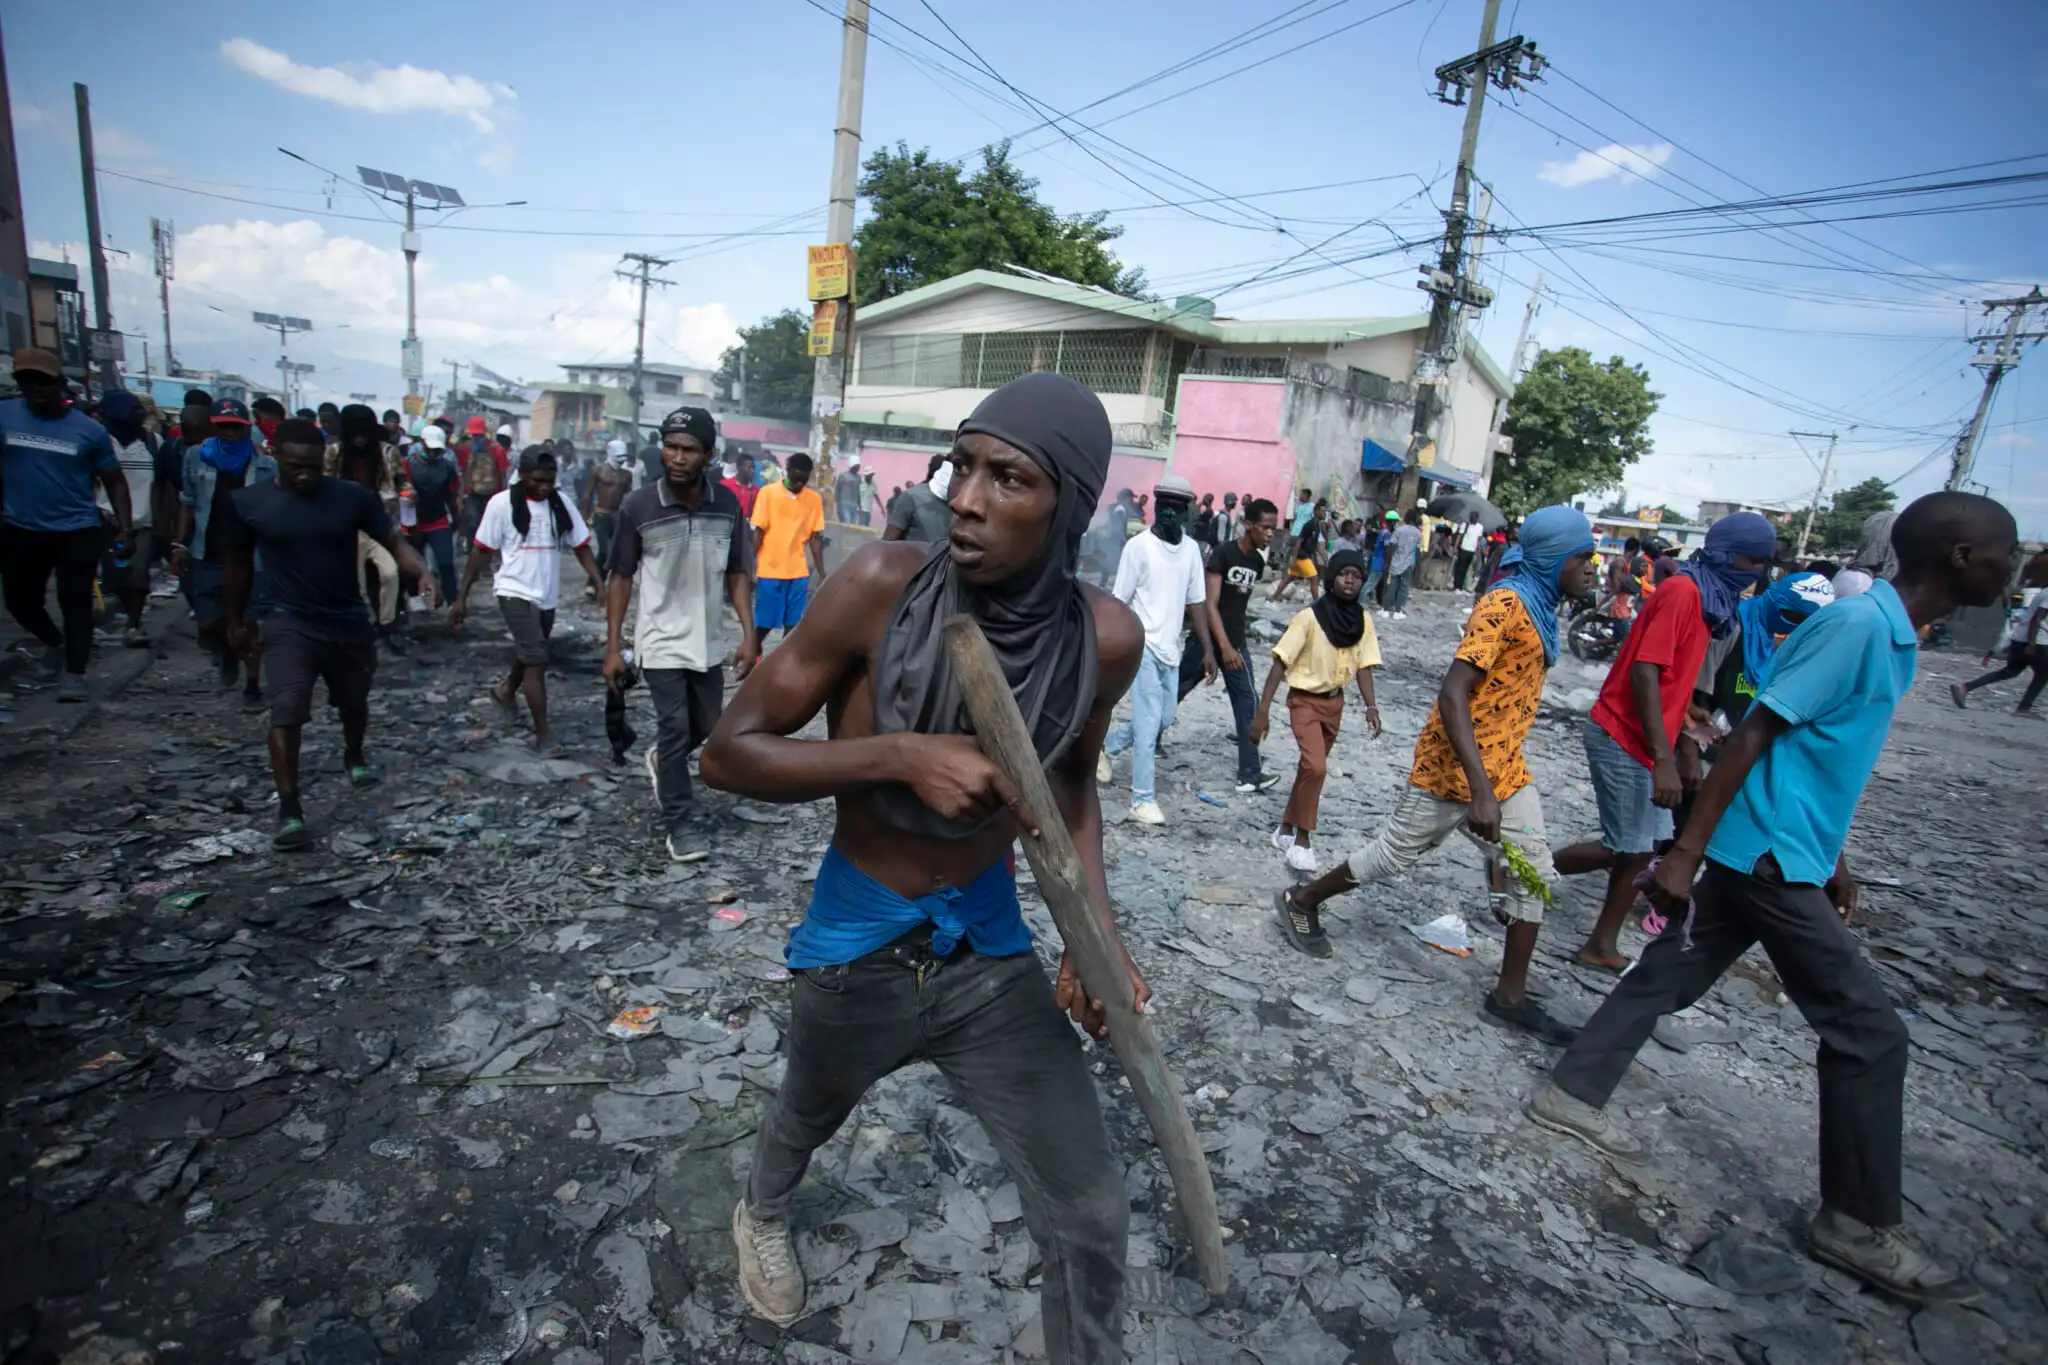 Mayor More than 12 killed in Haiti as gangs vie for control TheGrio